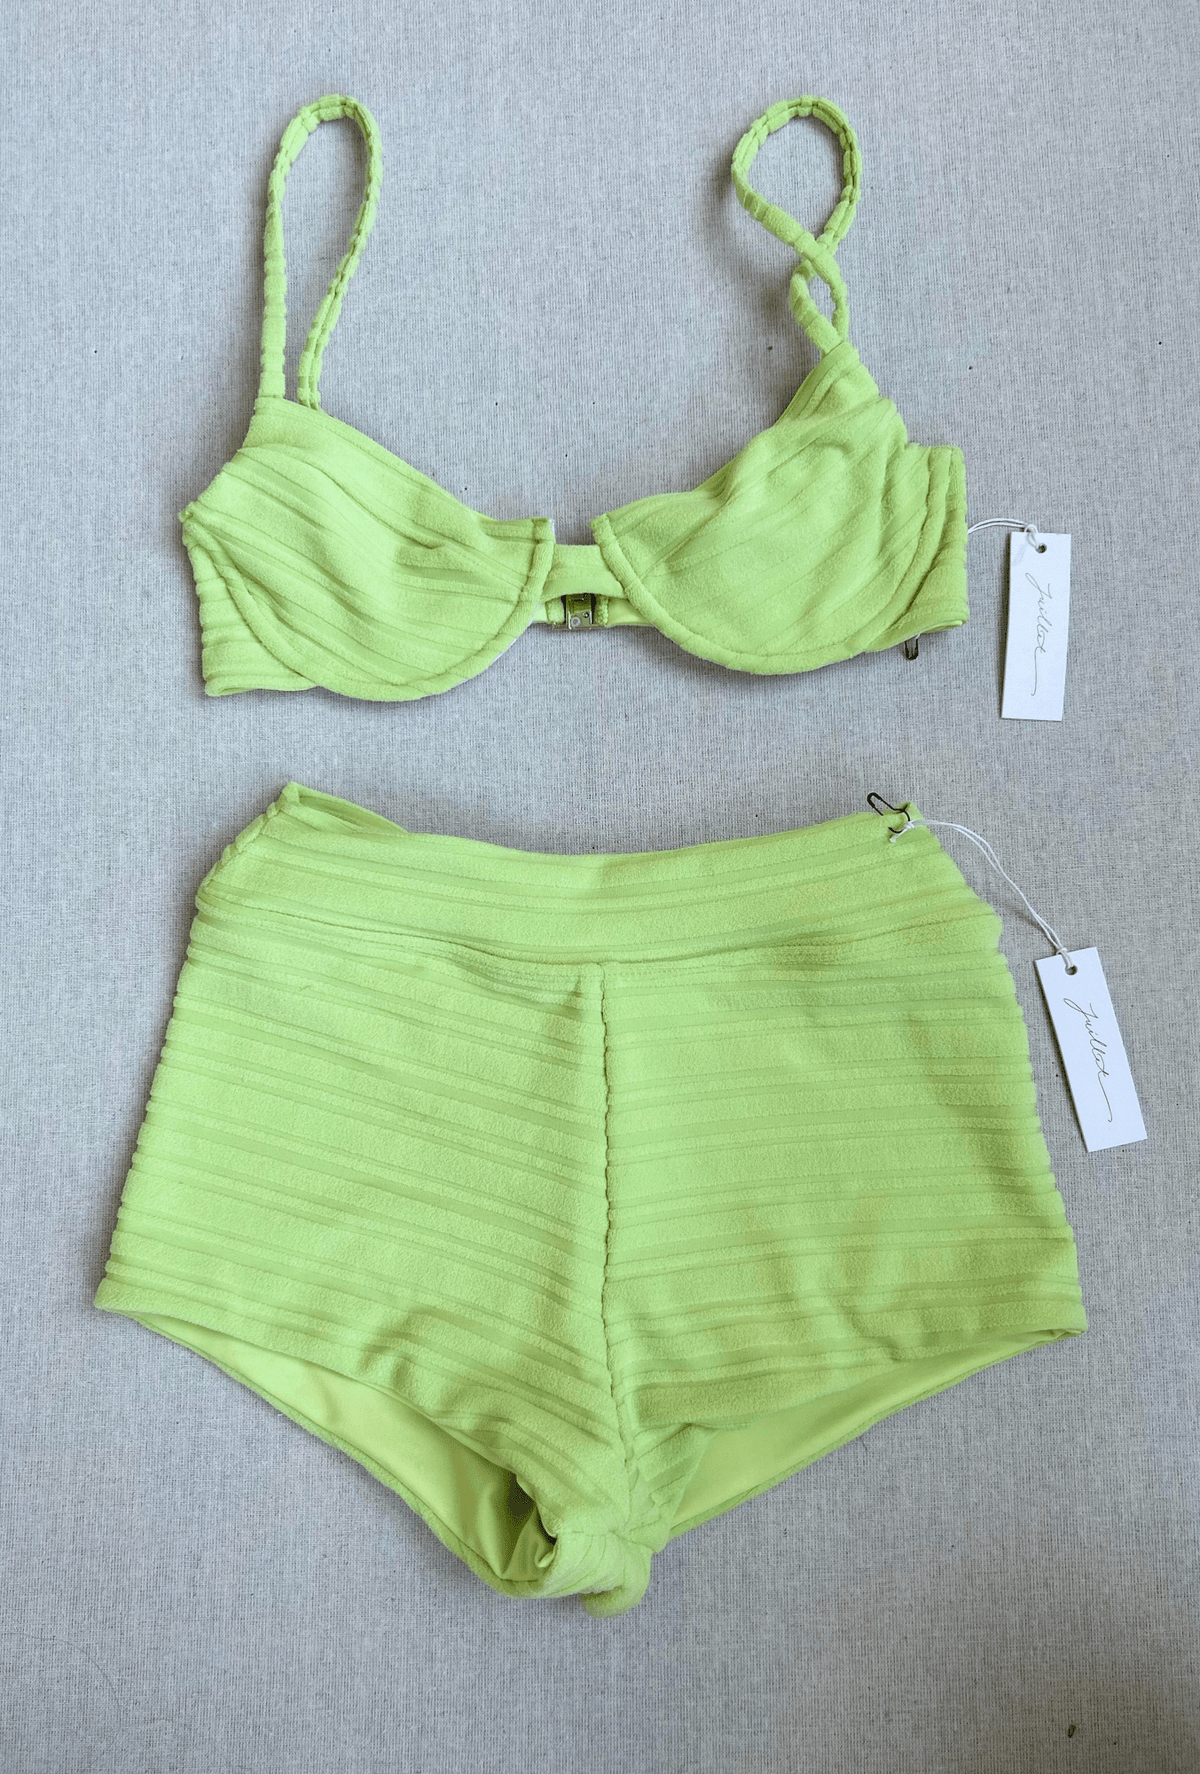 lulu top / sutton short in light green textured - size xs